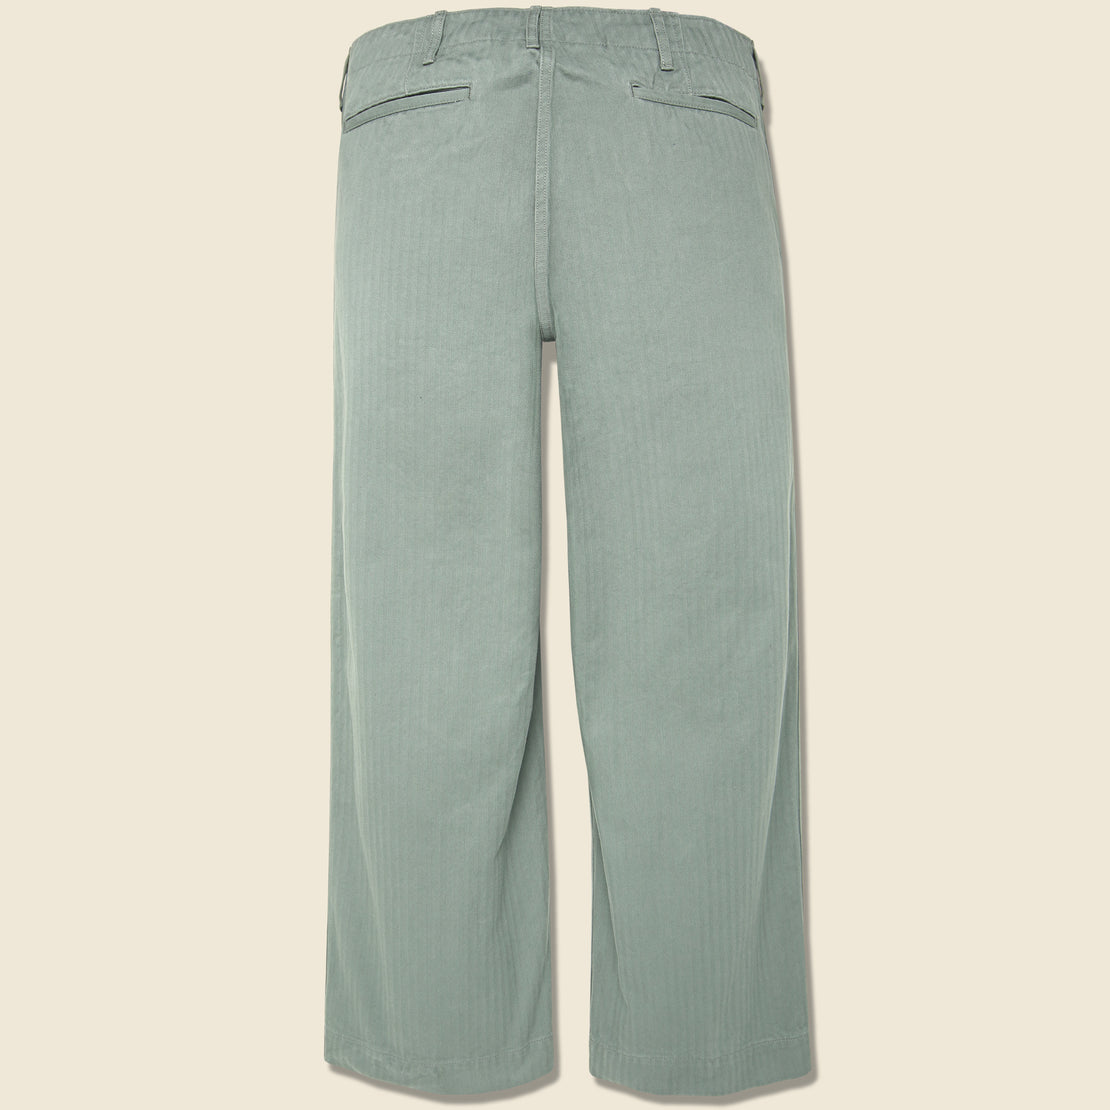 Herringbone Trousers - Sage - BEAMS+ - STAG Provisions - Pants - Twill